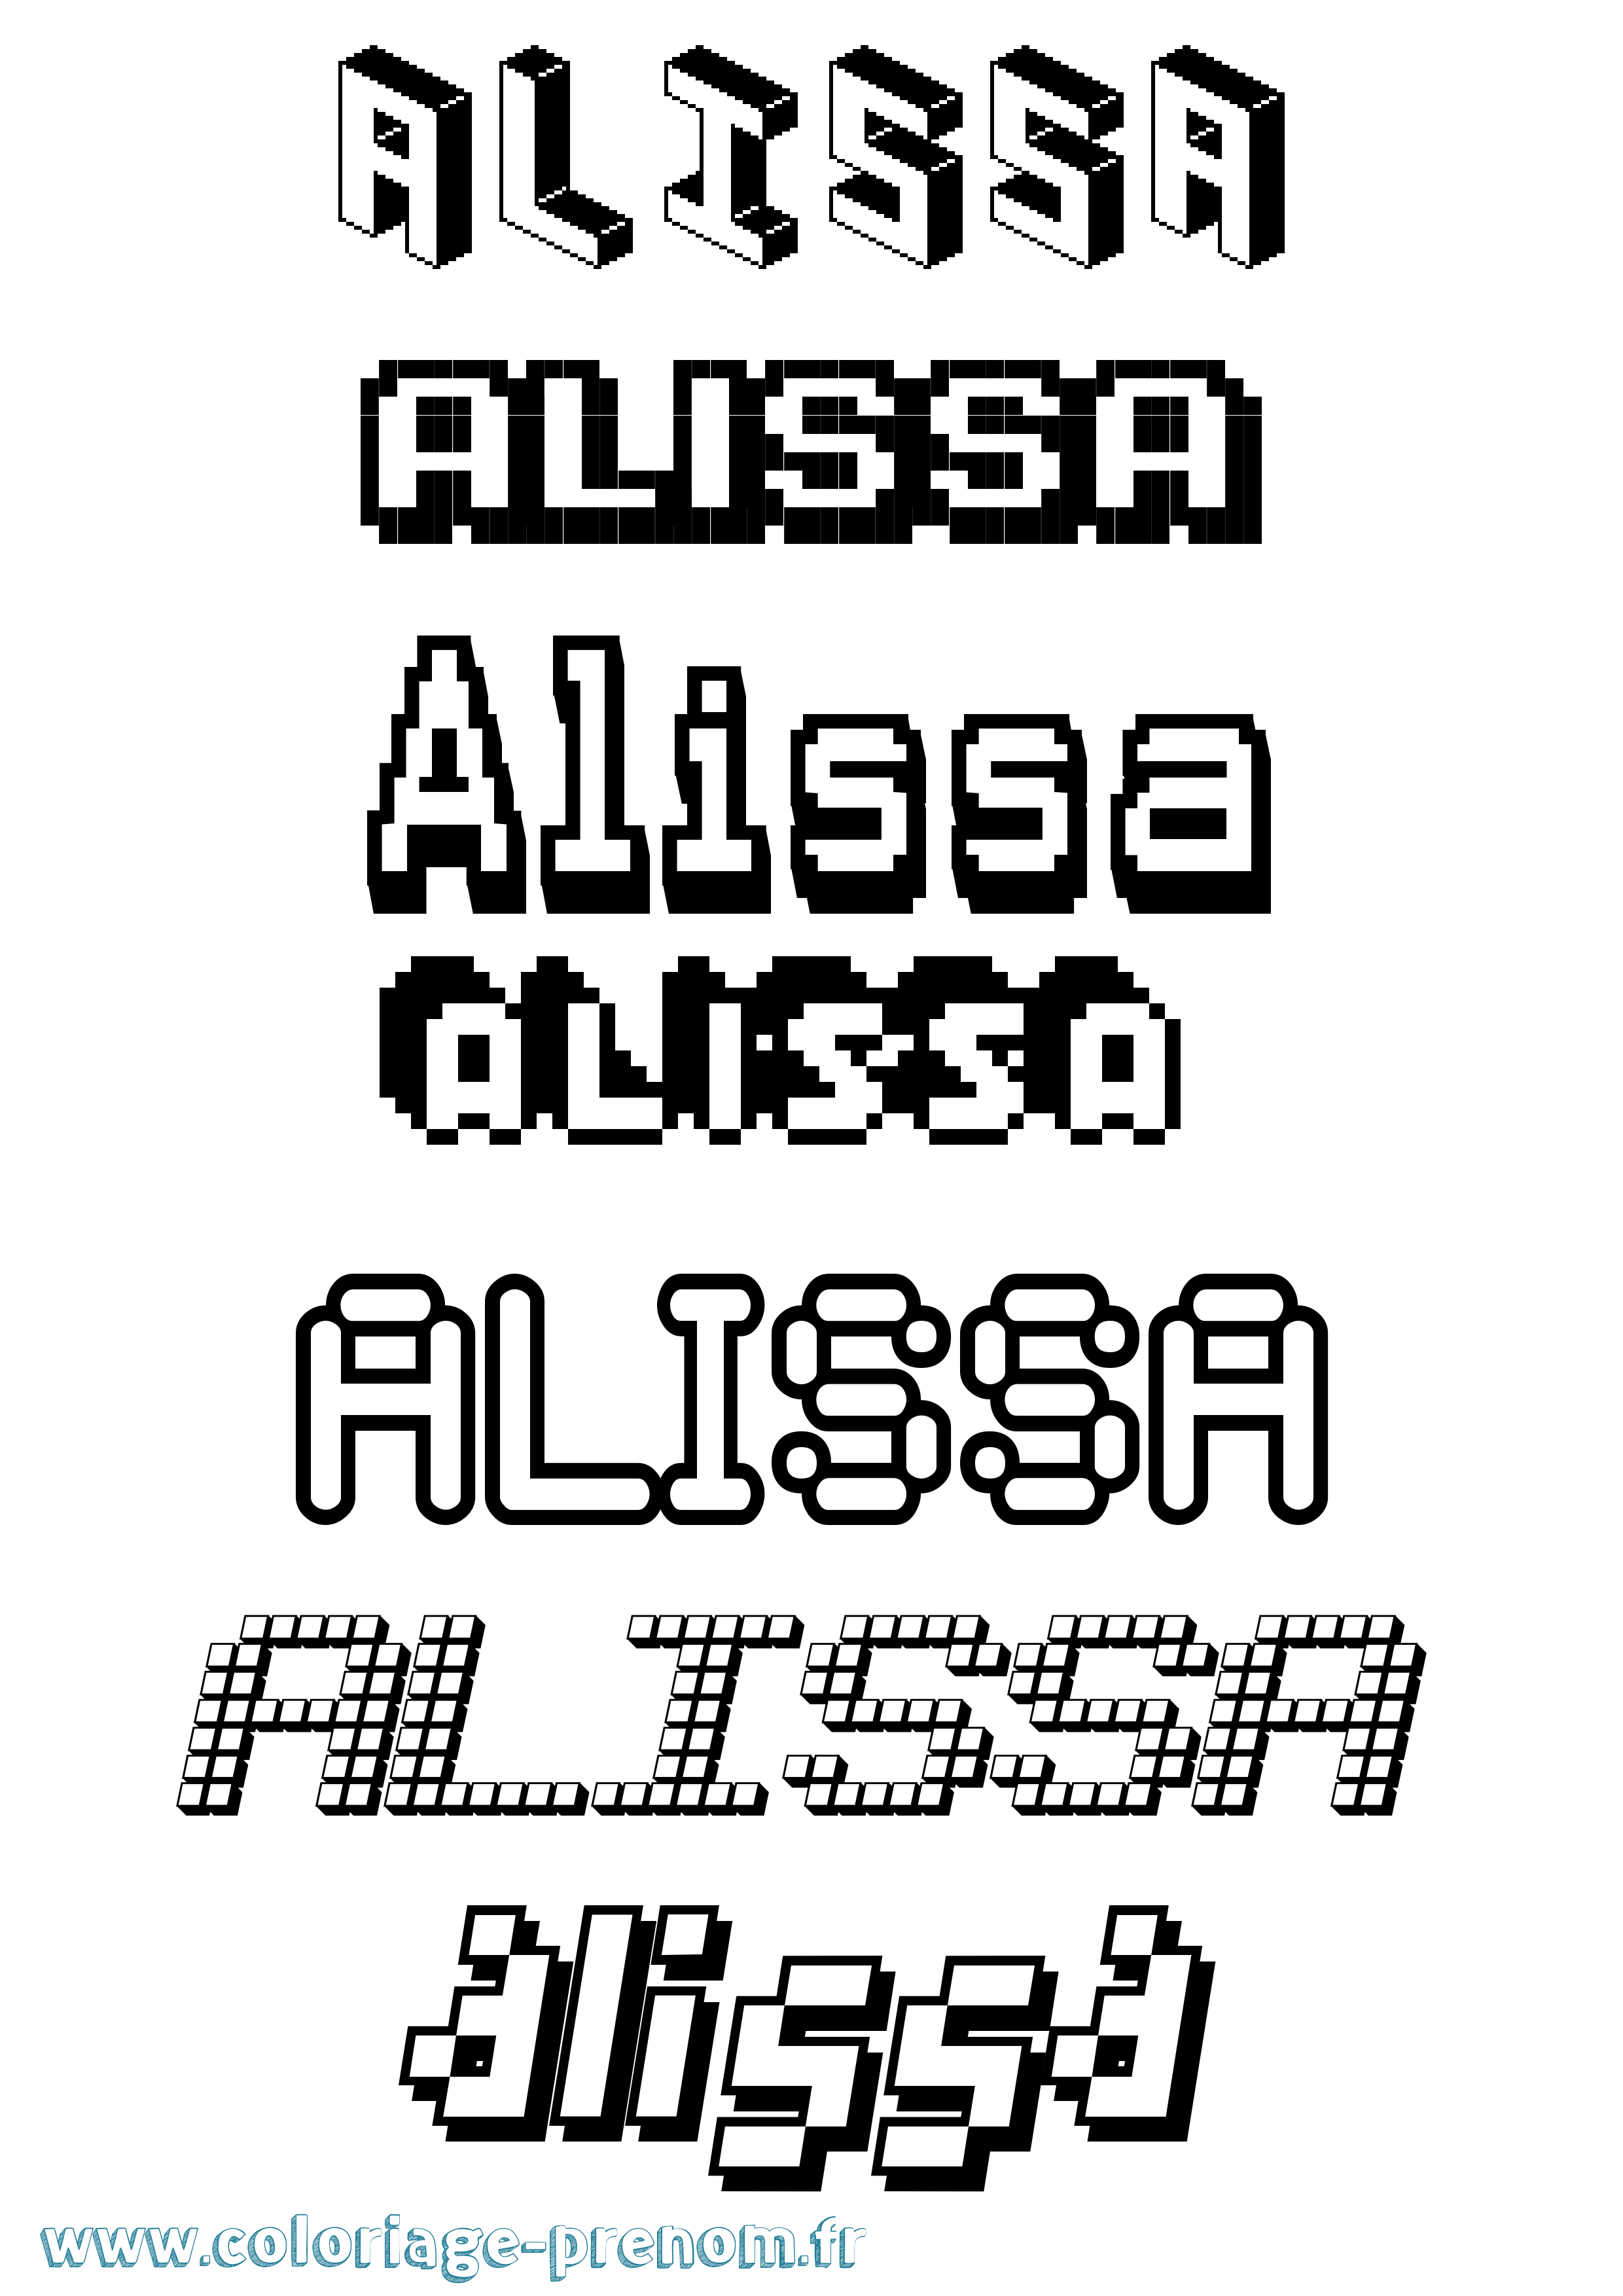 Coloriage prénom Alissa